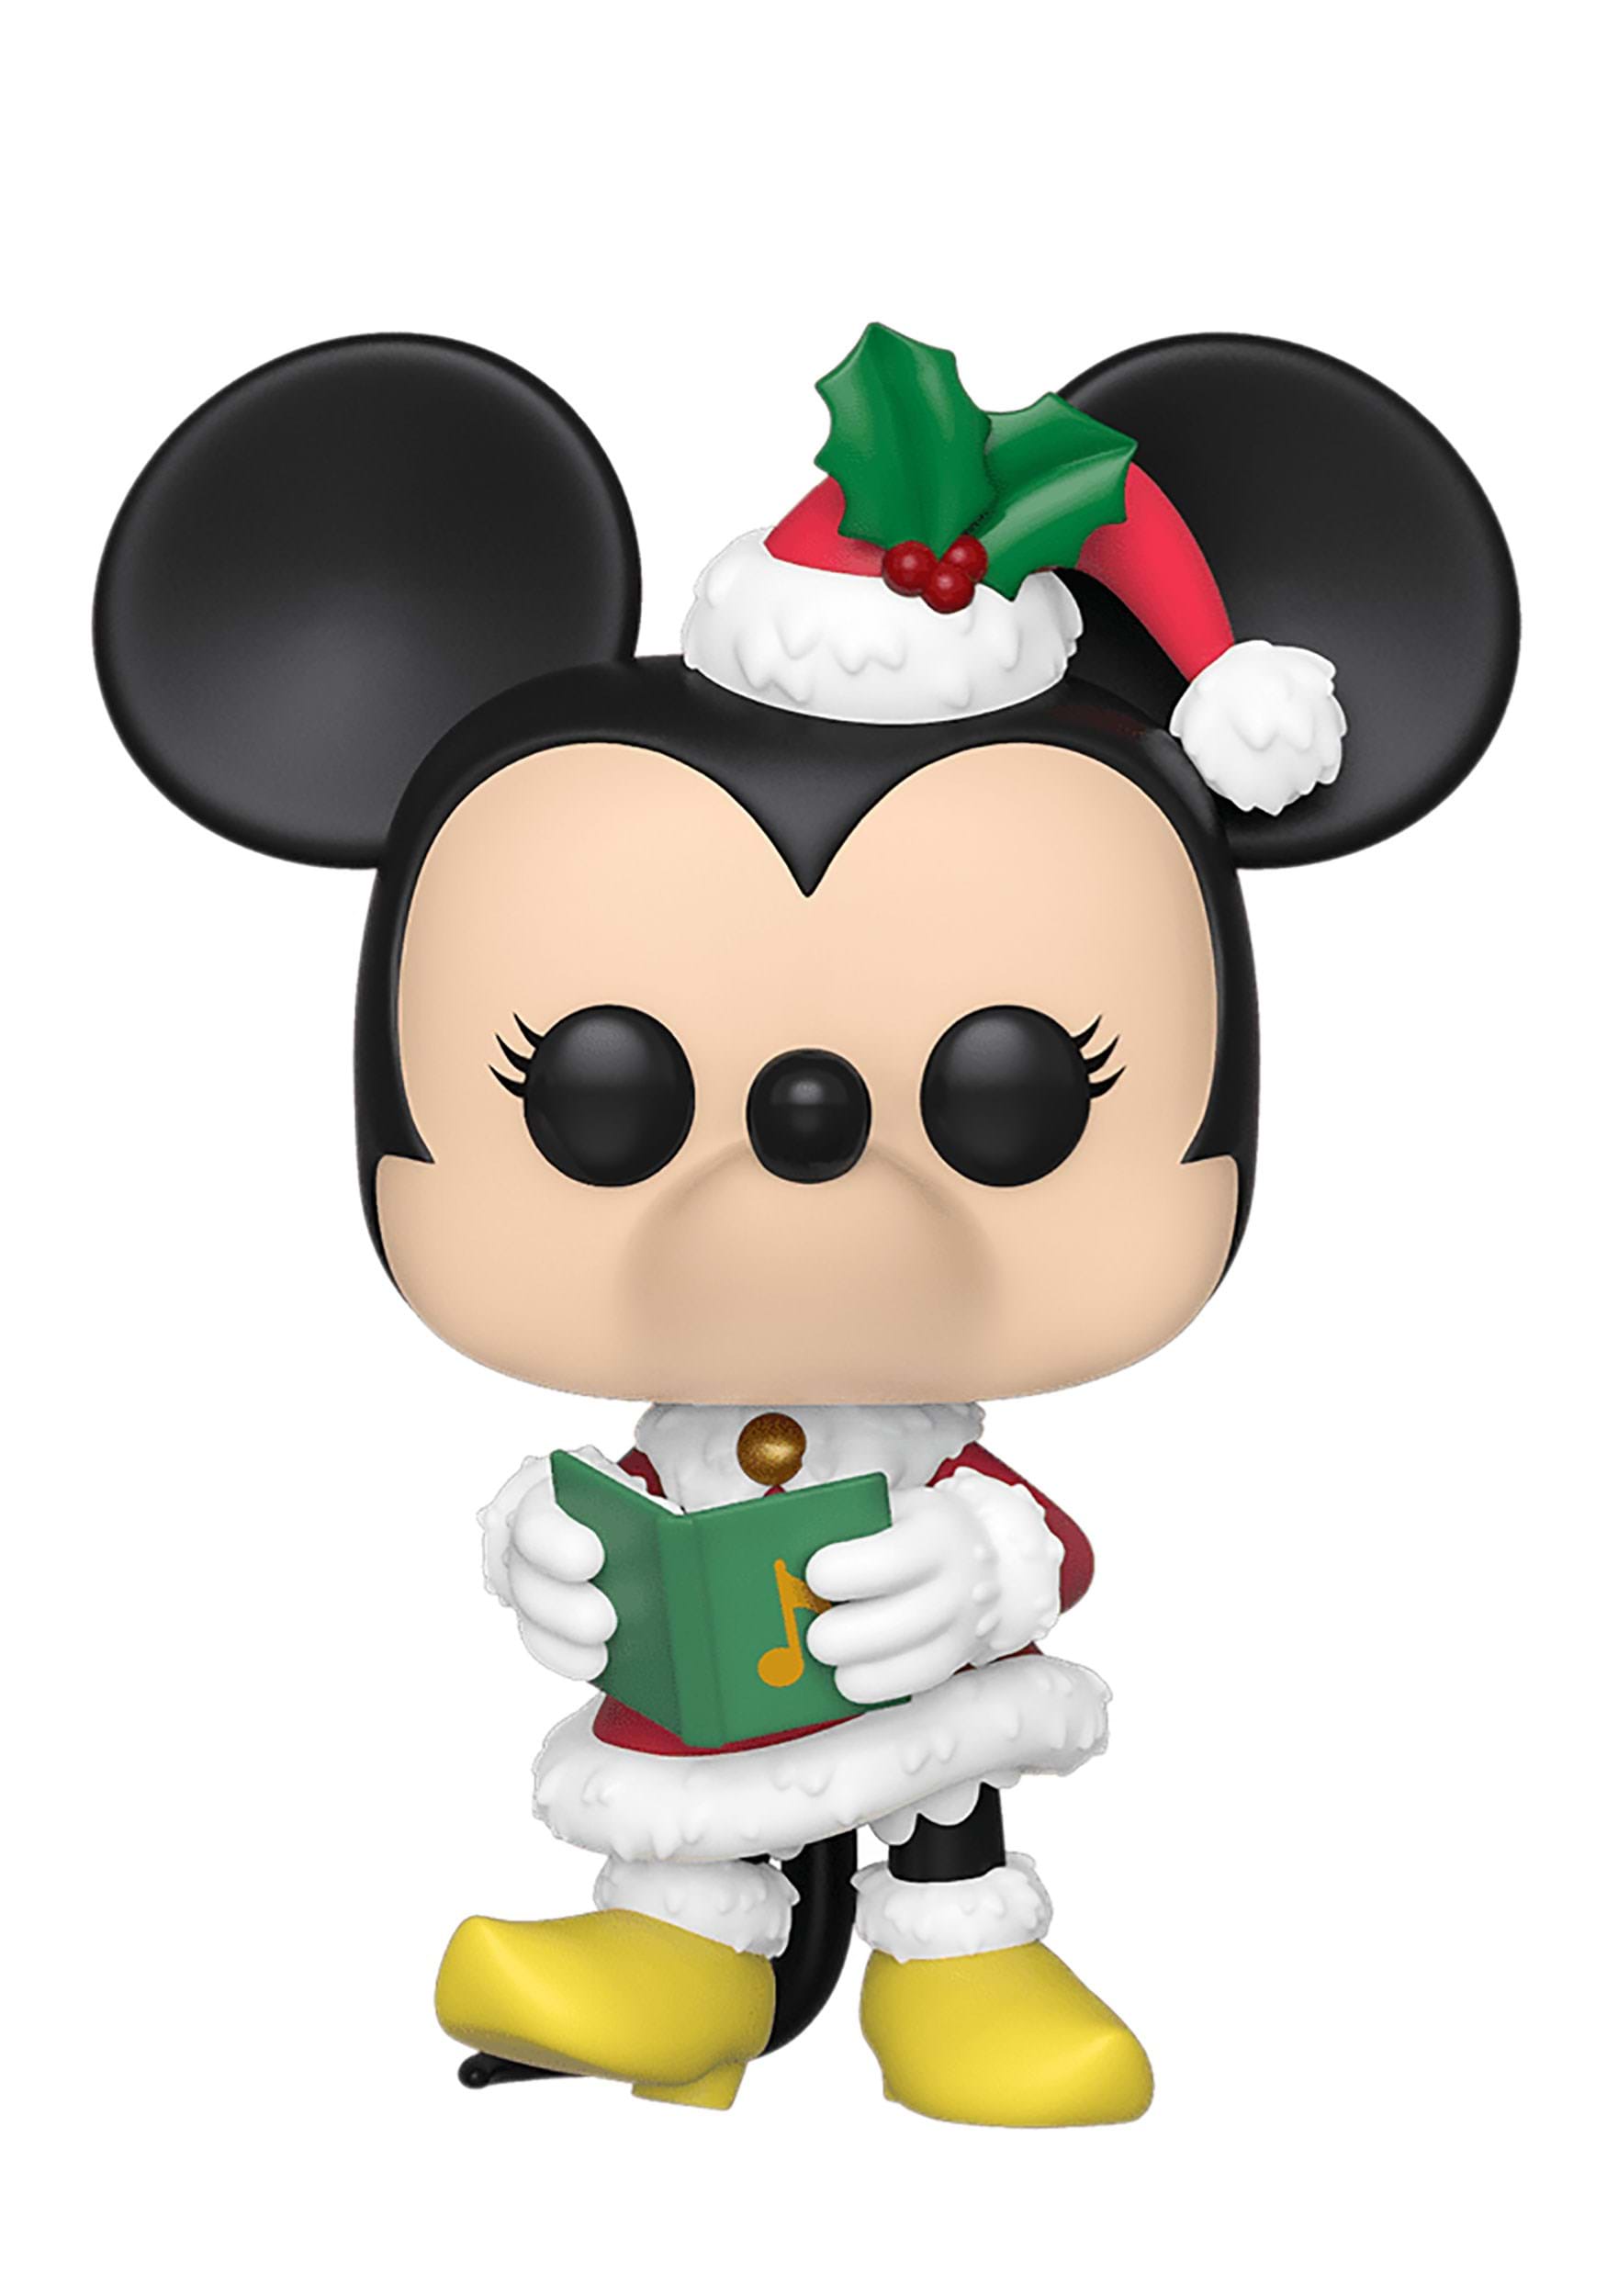 POP! Disney: Holiday Minnie Mouse Vinyl Figure